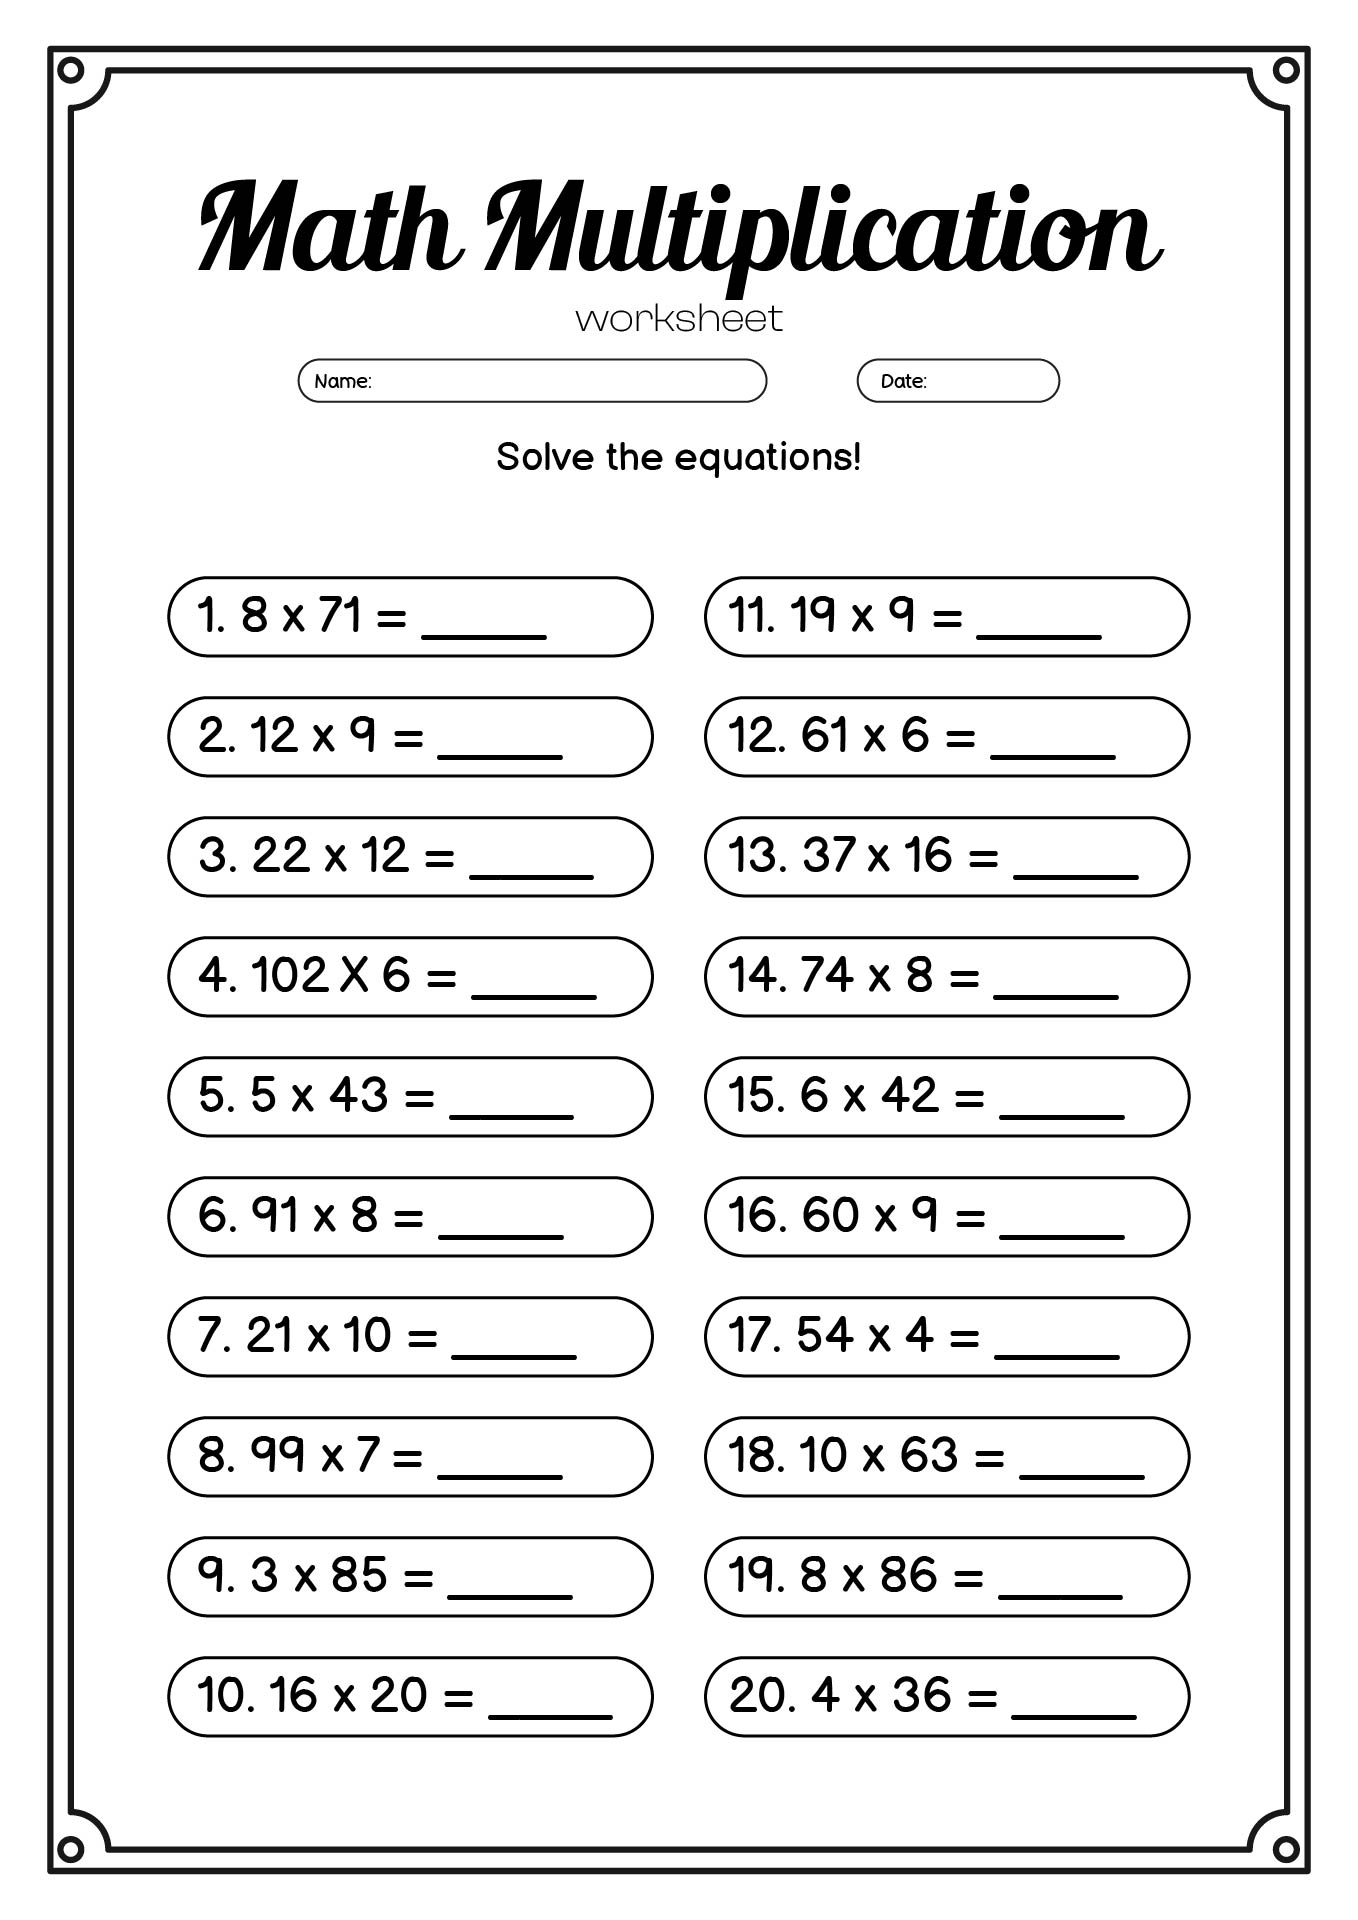 Grade 6 Math Multiplication Problems Worksheet